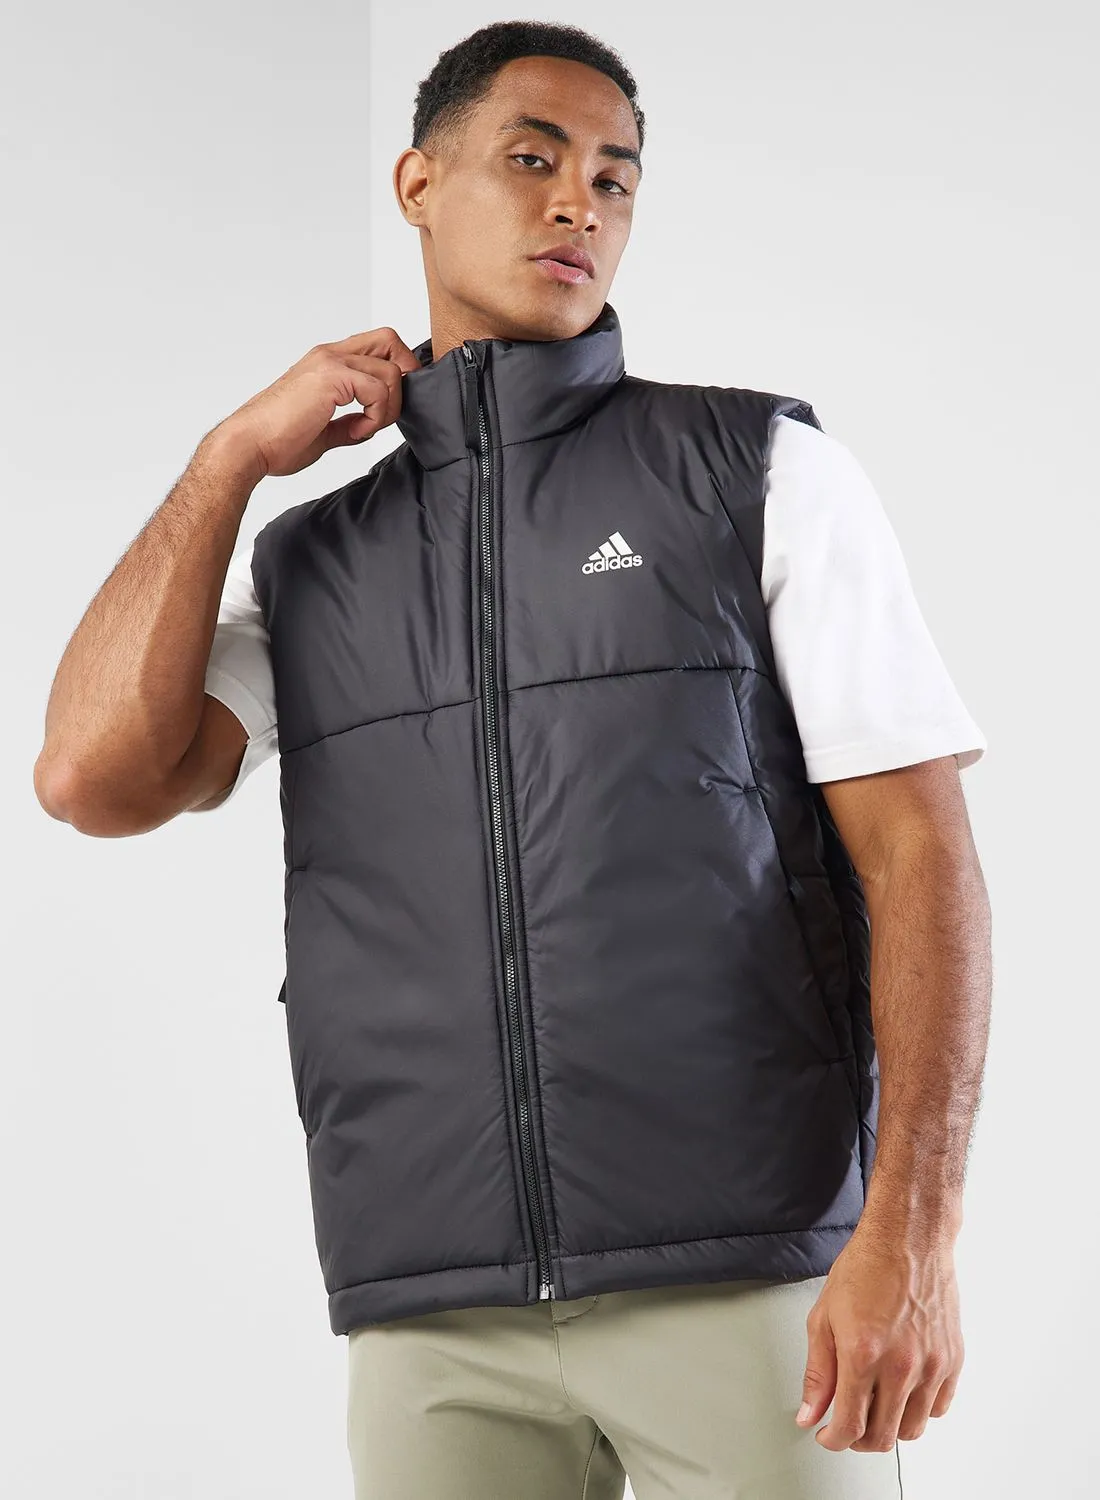 Adidas 3 Stripes Vest